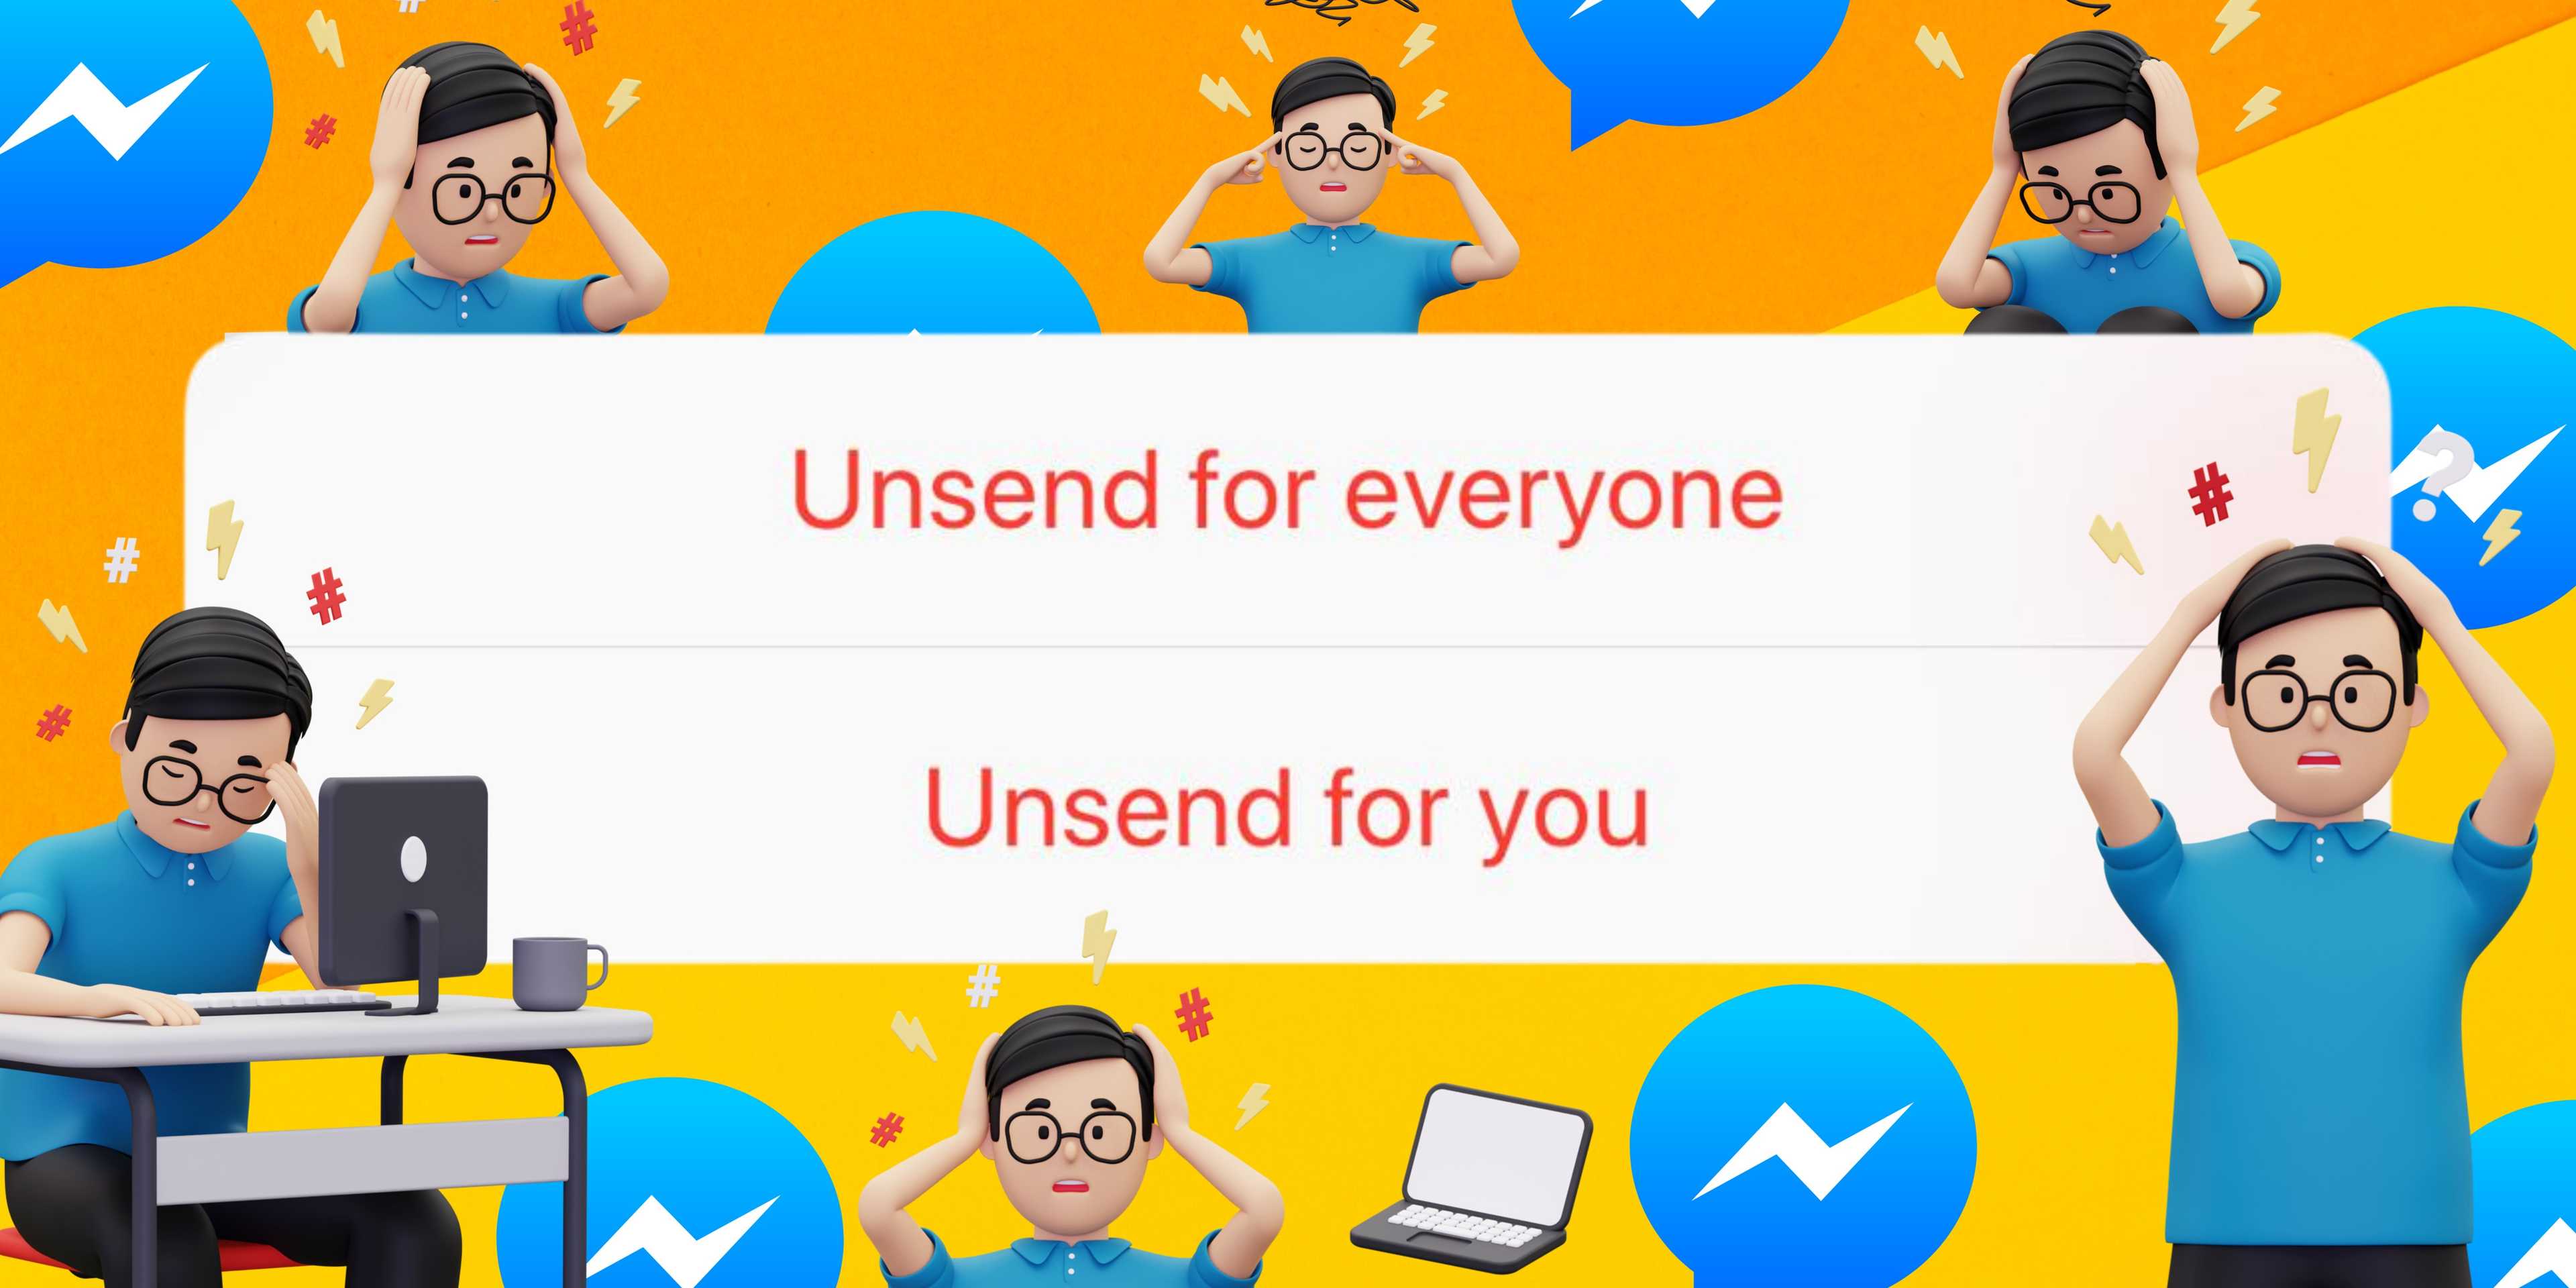 Can't unsend? Netizens panic over FB messenger glitch